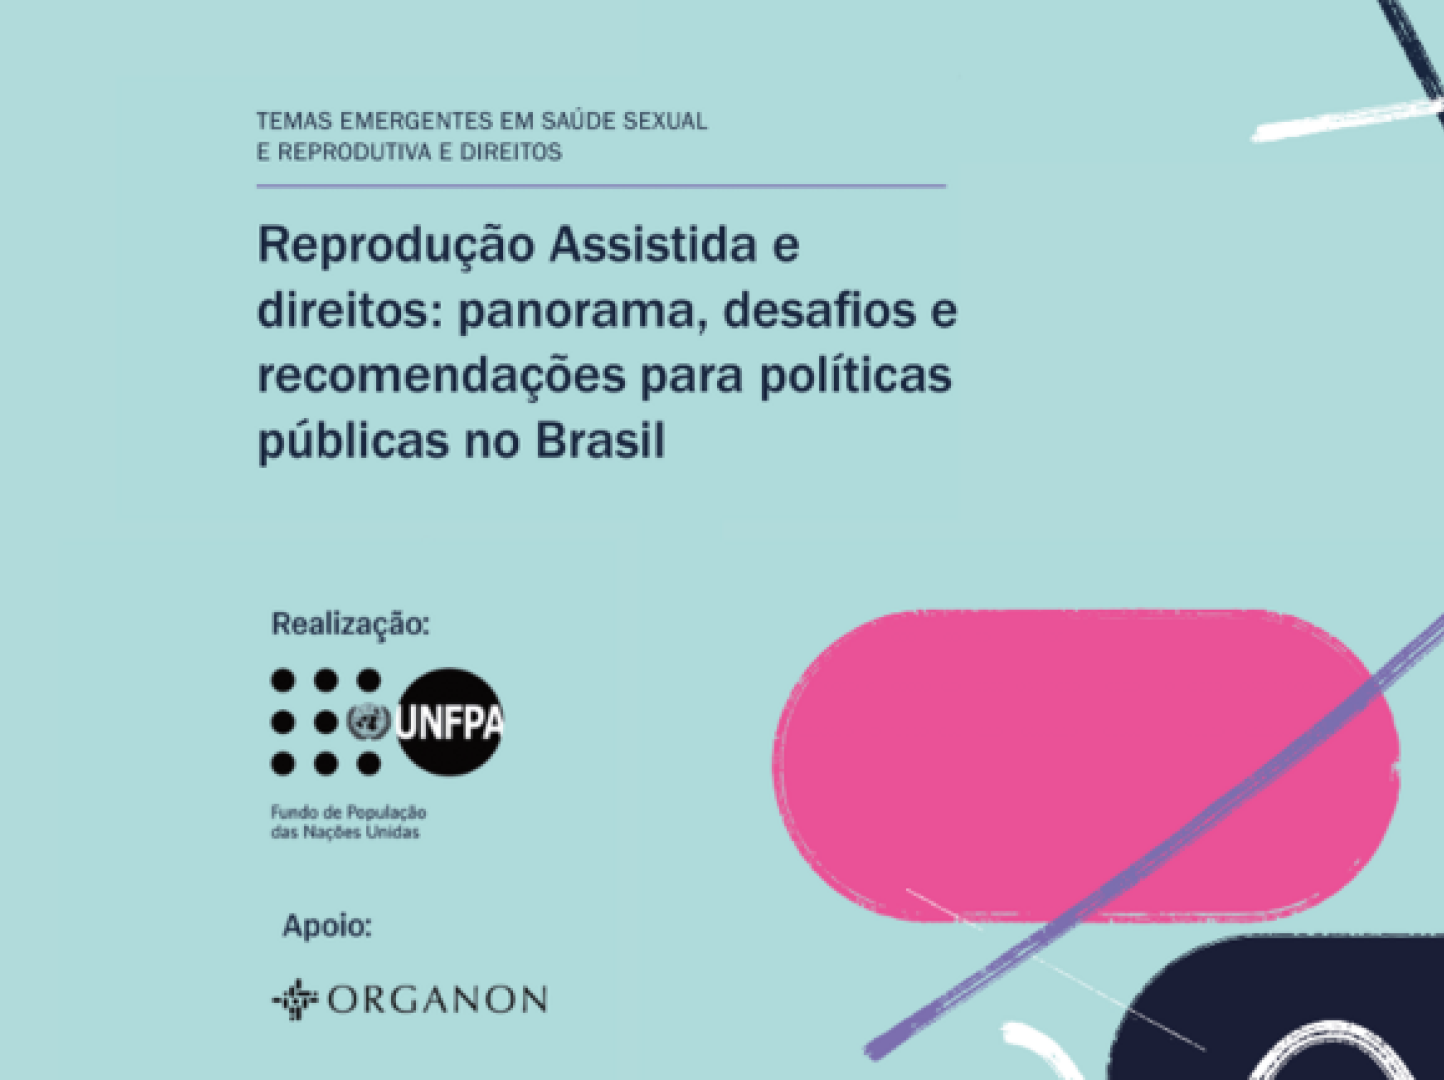 Brasil reforça sua capacidade de entrega a consumidores de  comunidades locais - About  Brasil